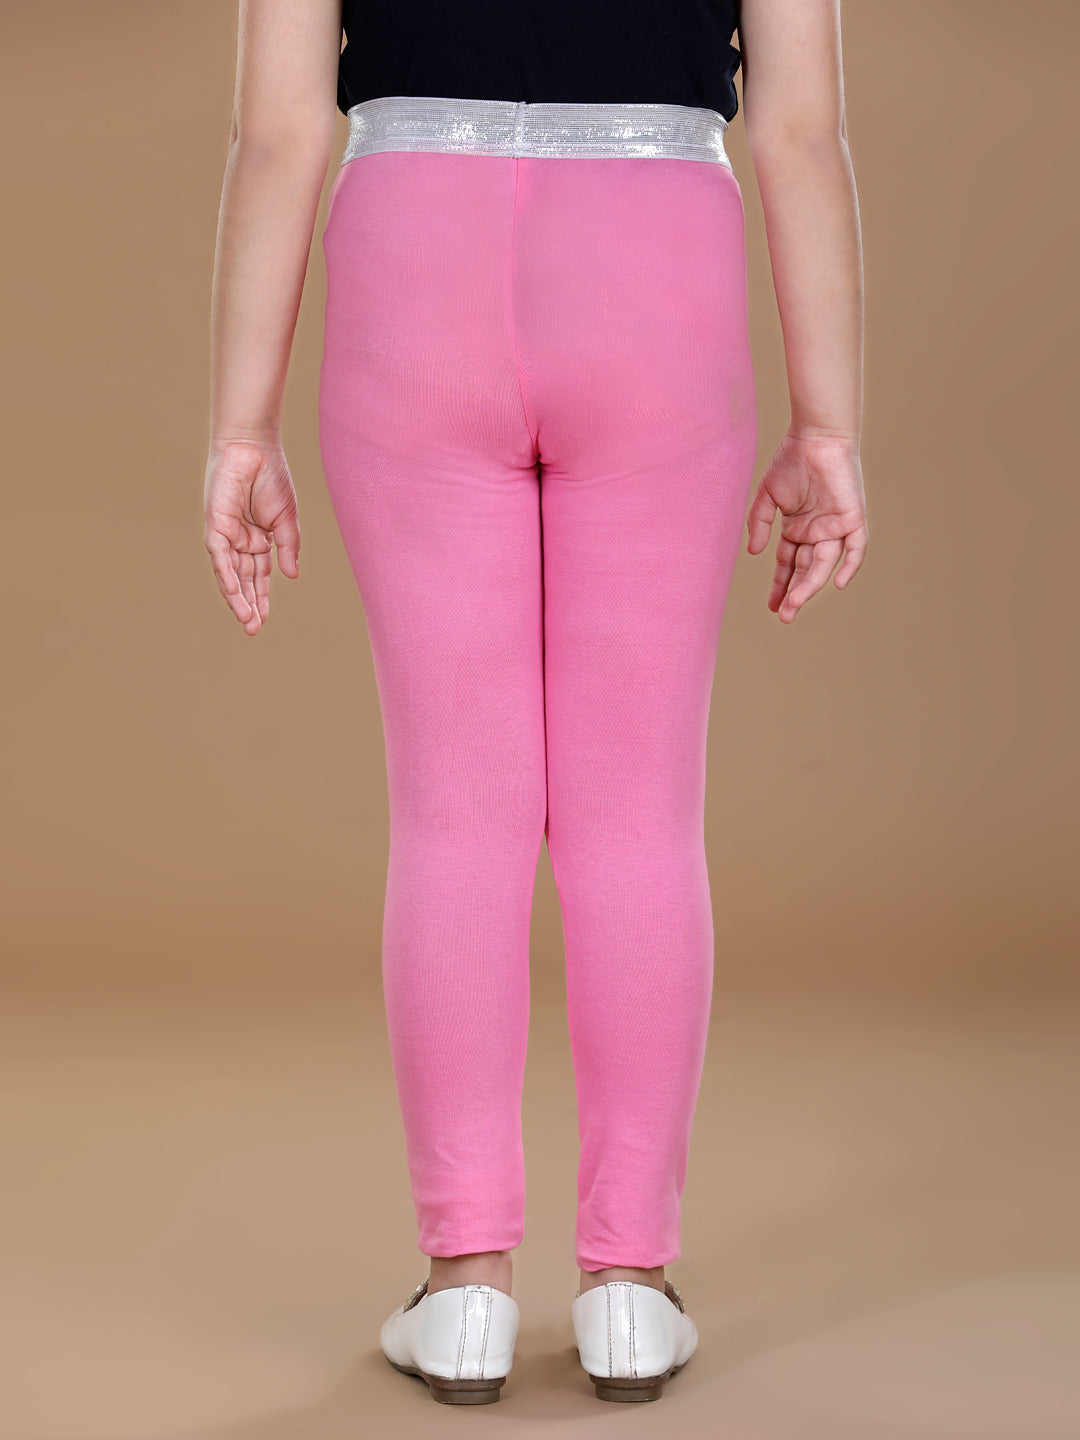 Girls Pack of 2 Star Printed Leggings- Pink & Black